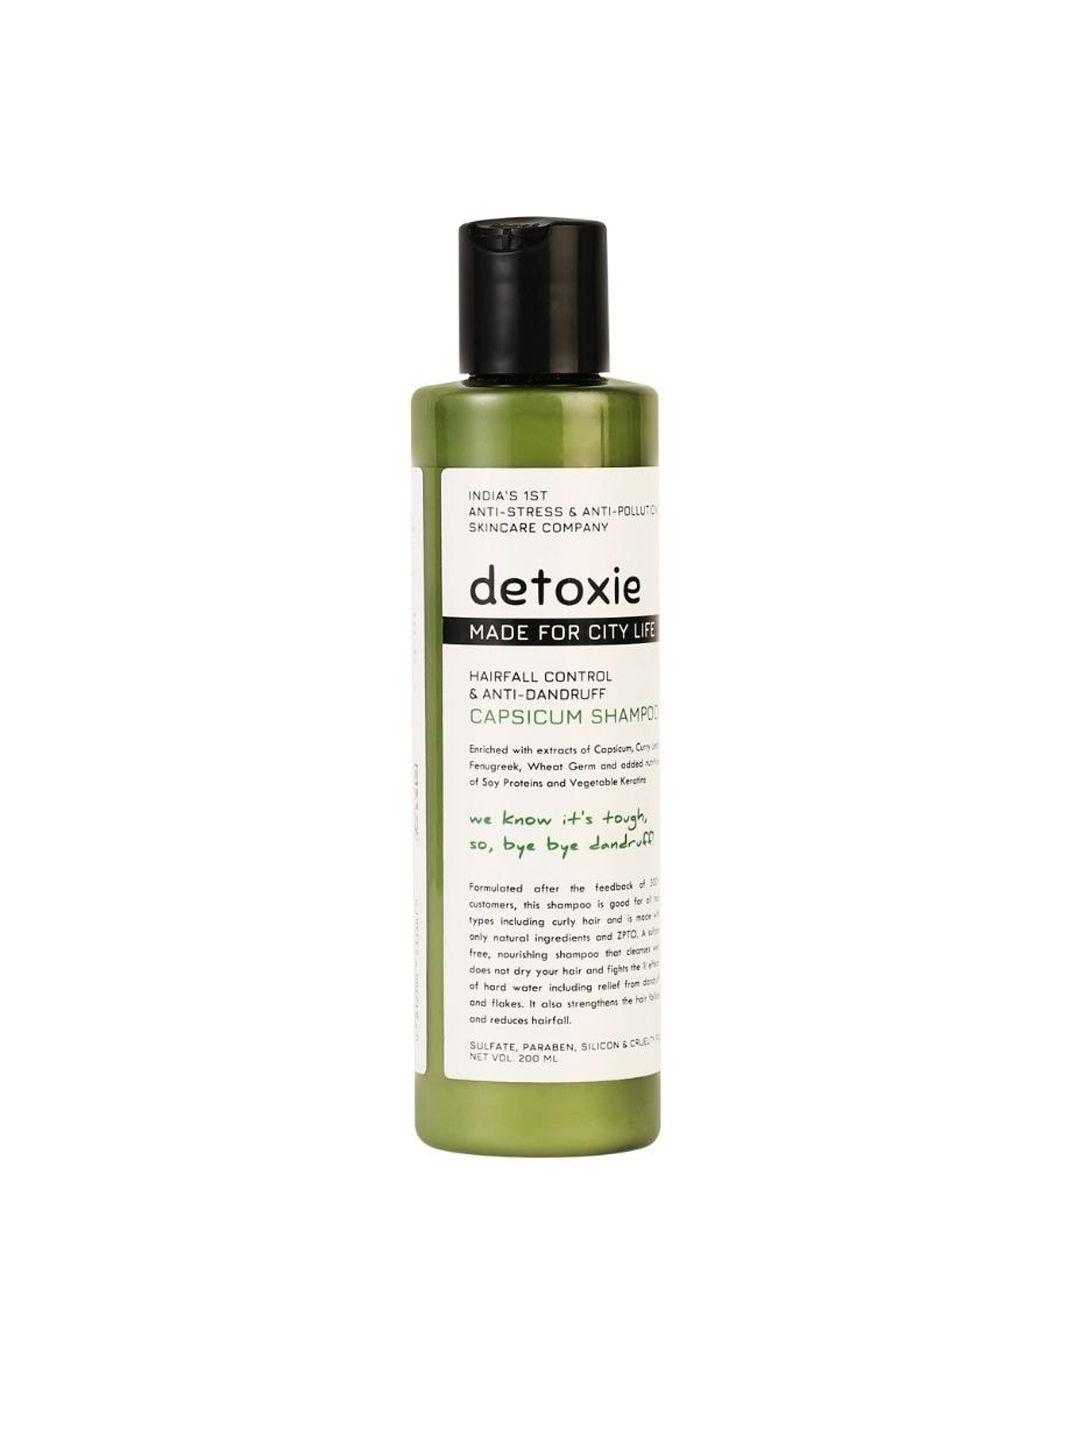 detoxie anti-dandruff & flake relief capsicum shampoo - 200 ml